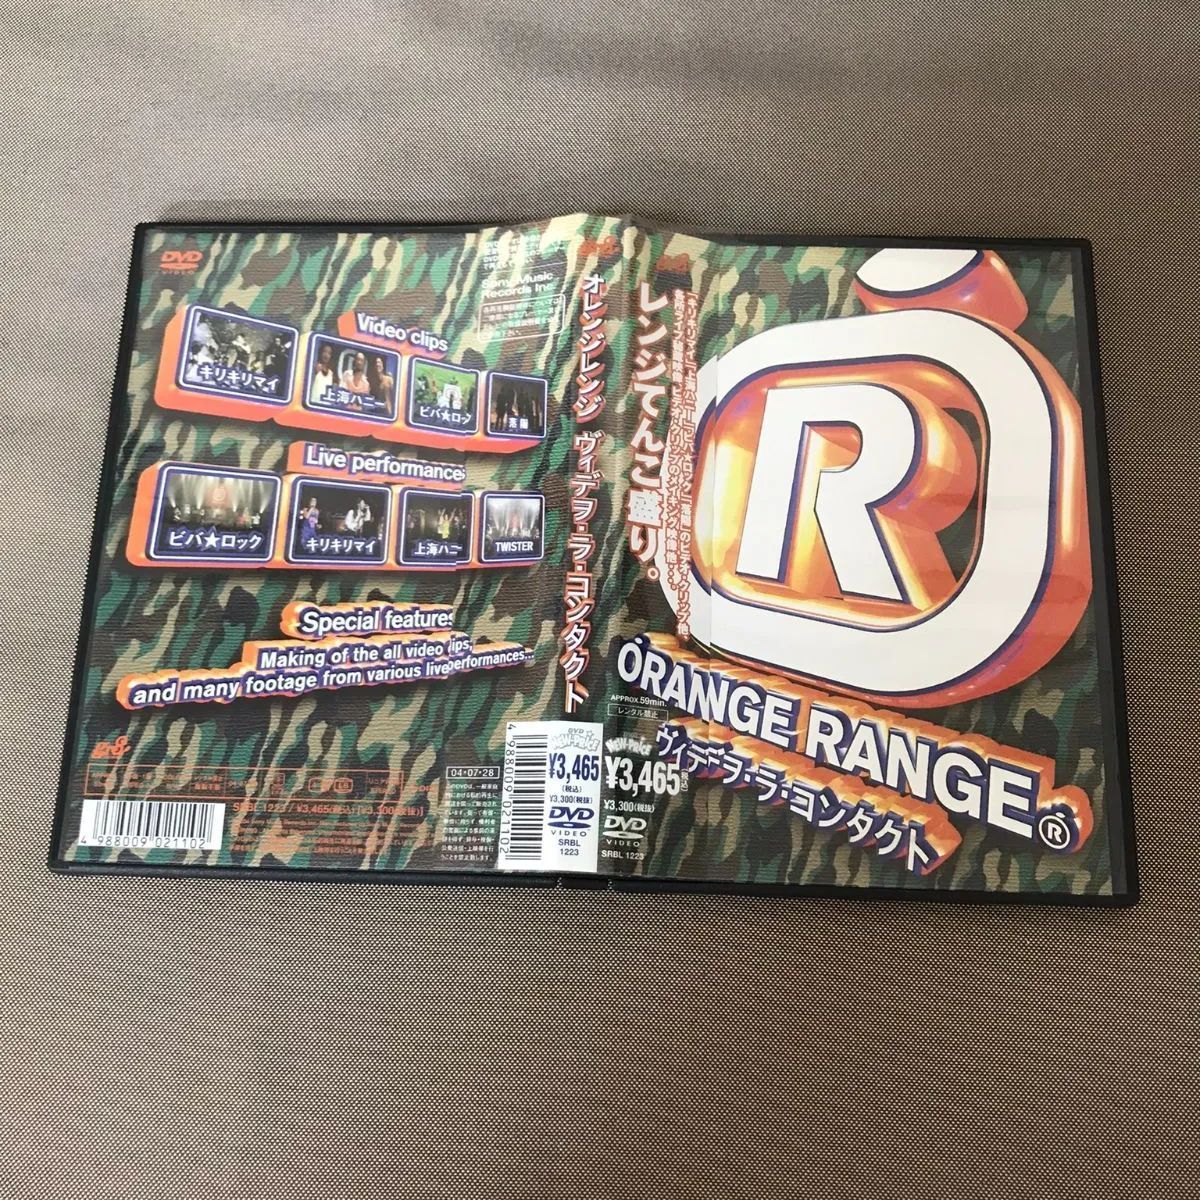 ORANGE RANGE ヴィデヲ・ラ・コンタクト - ミュージック